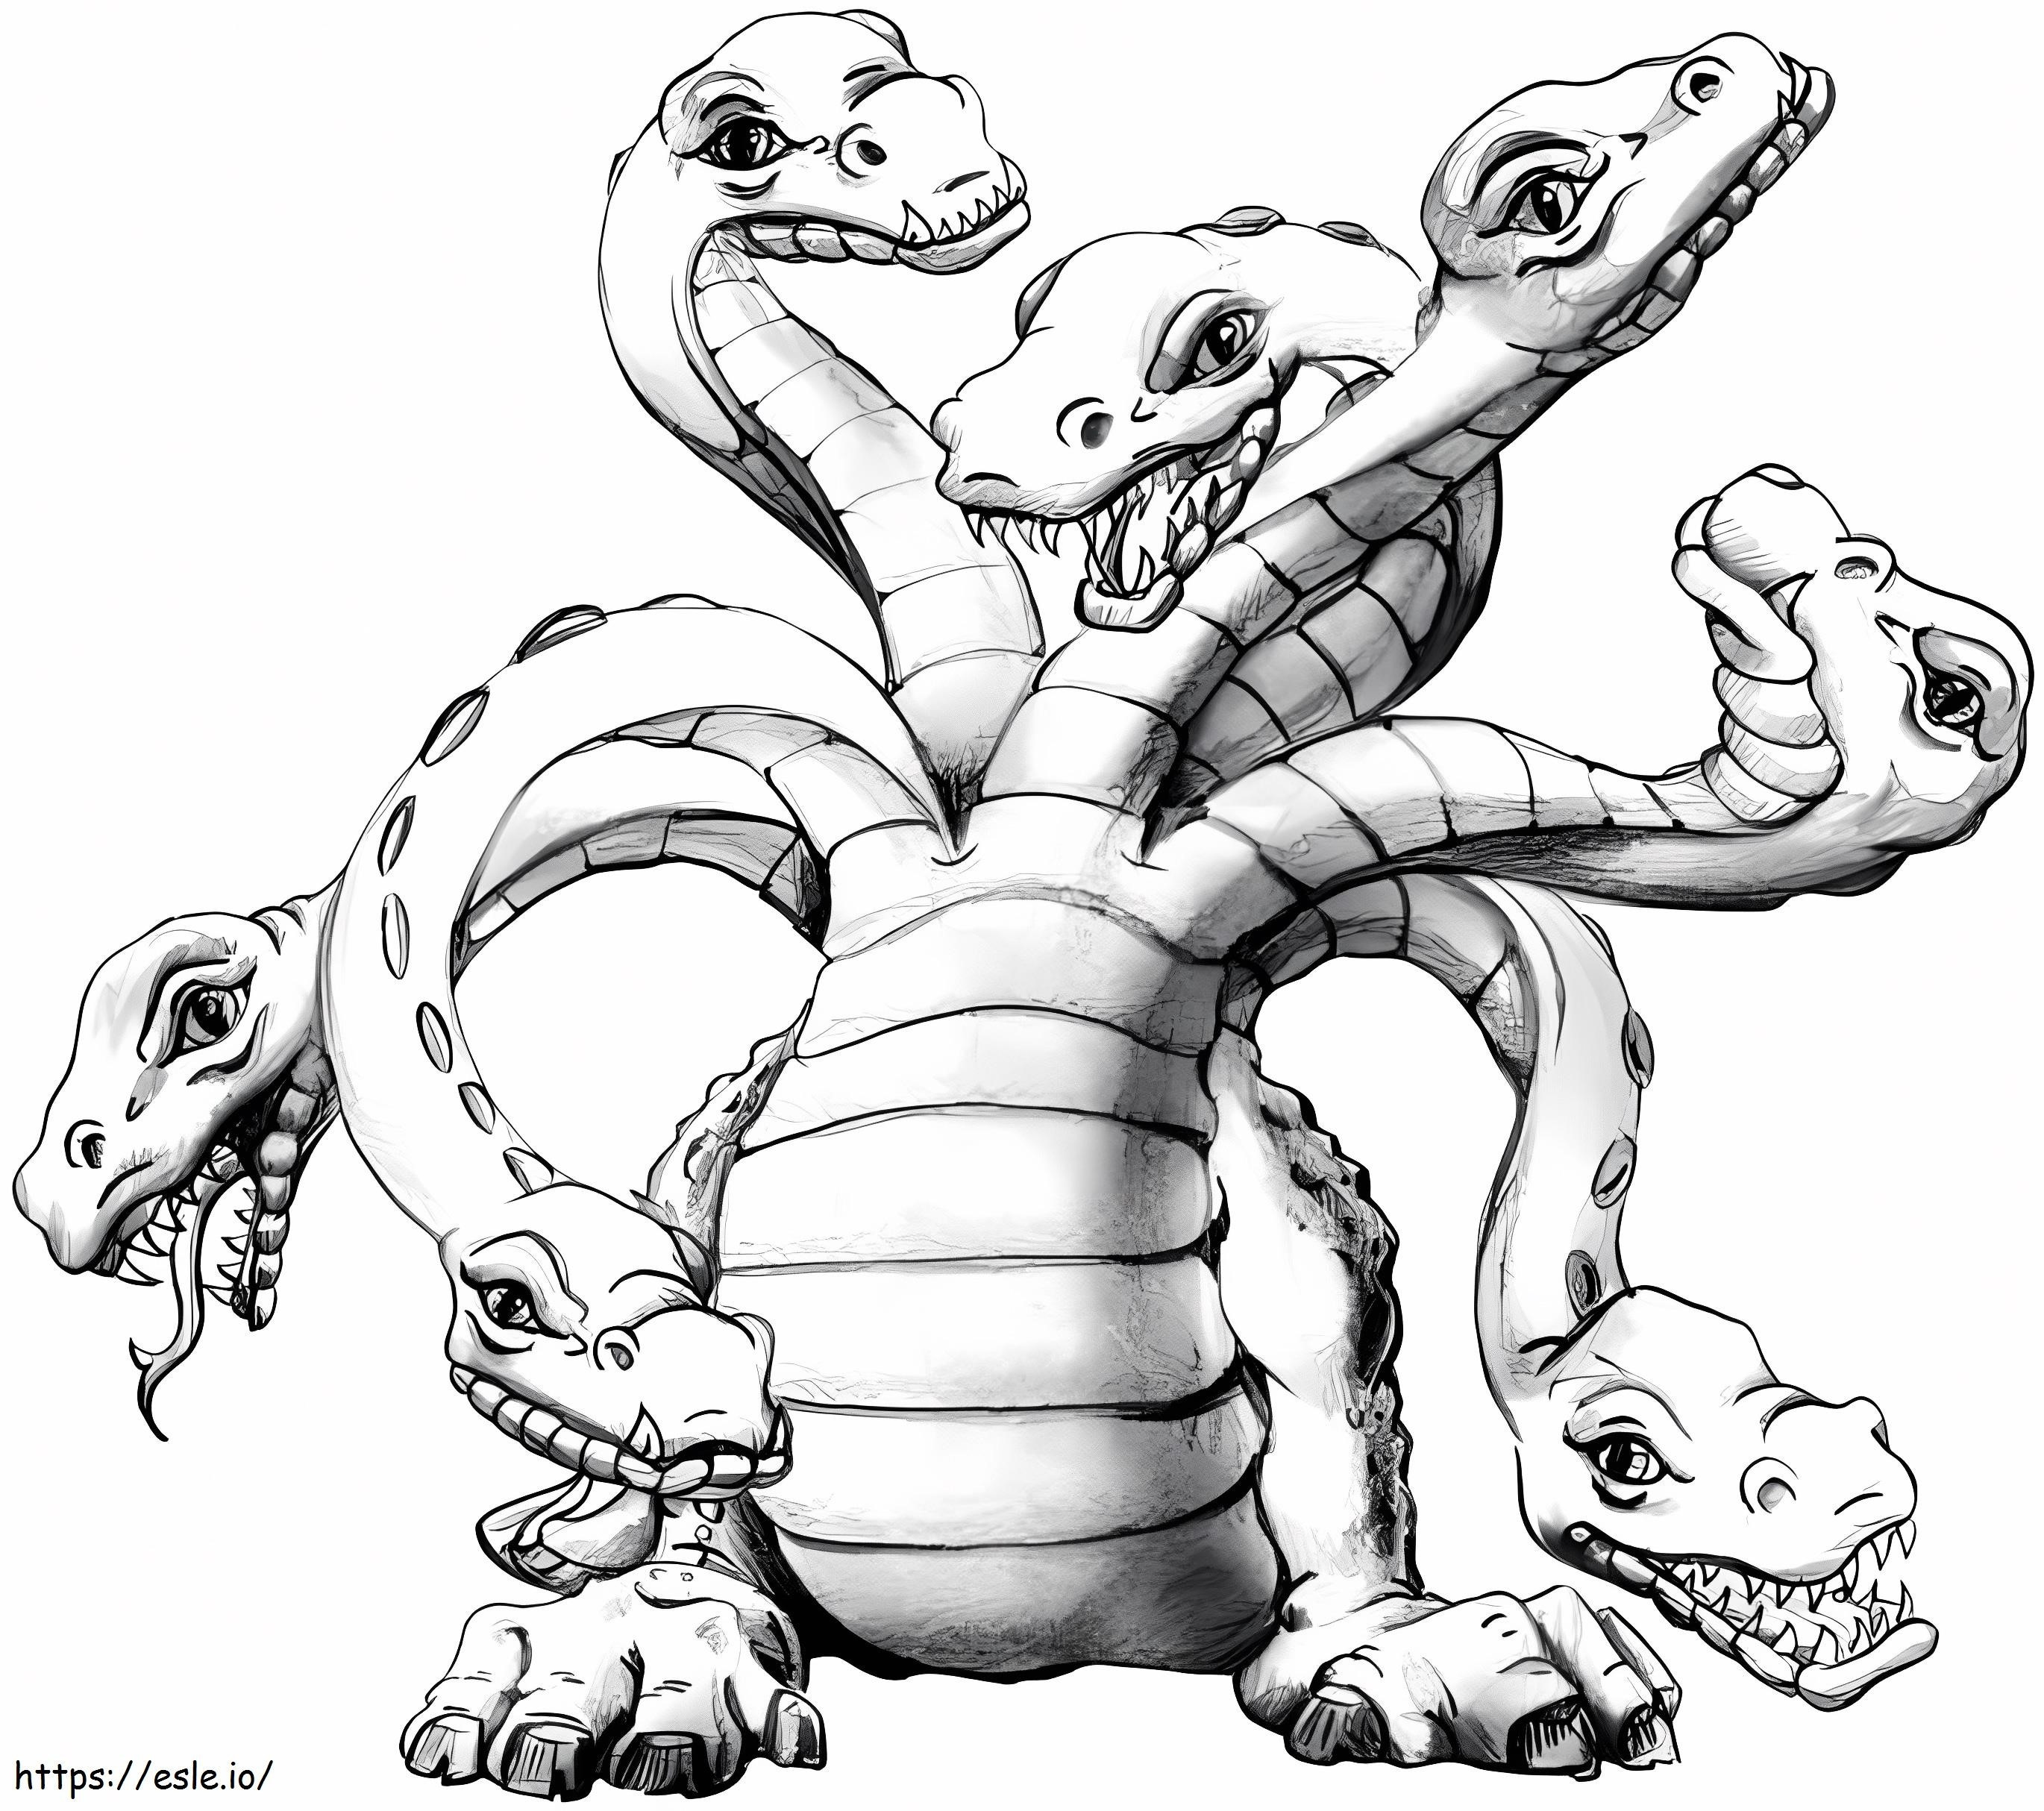 Cartoon Hydra coloring page